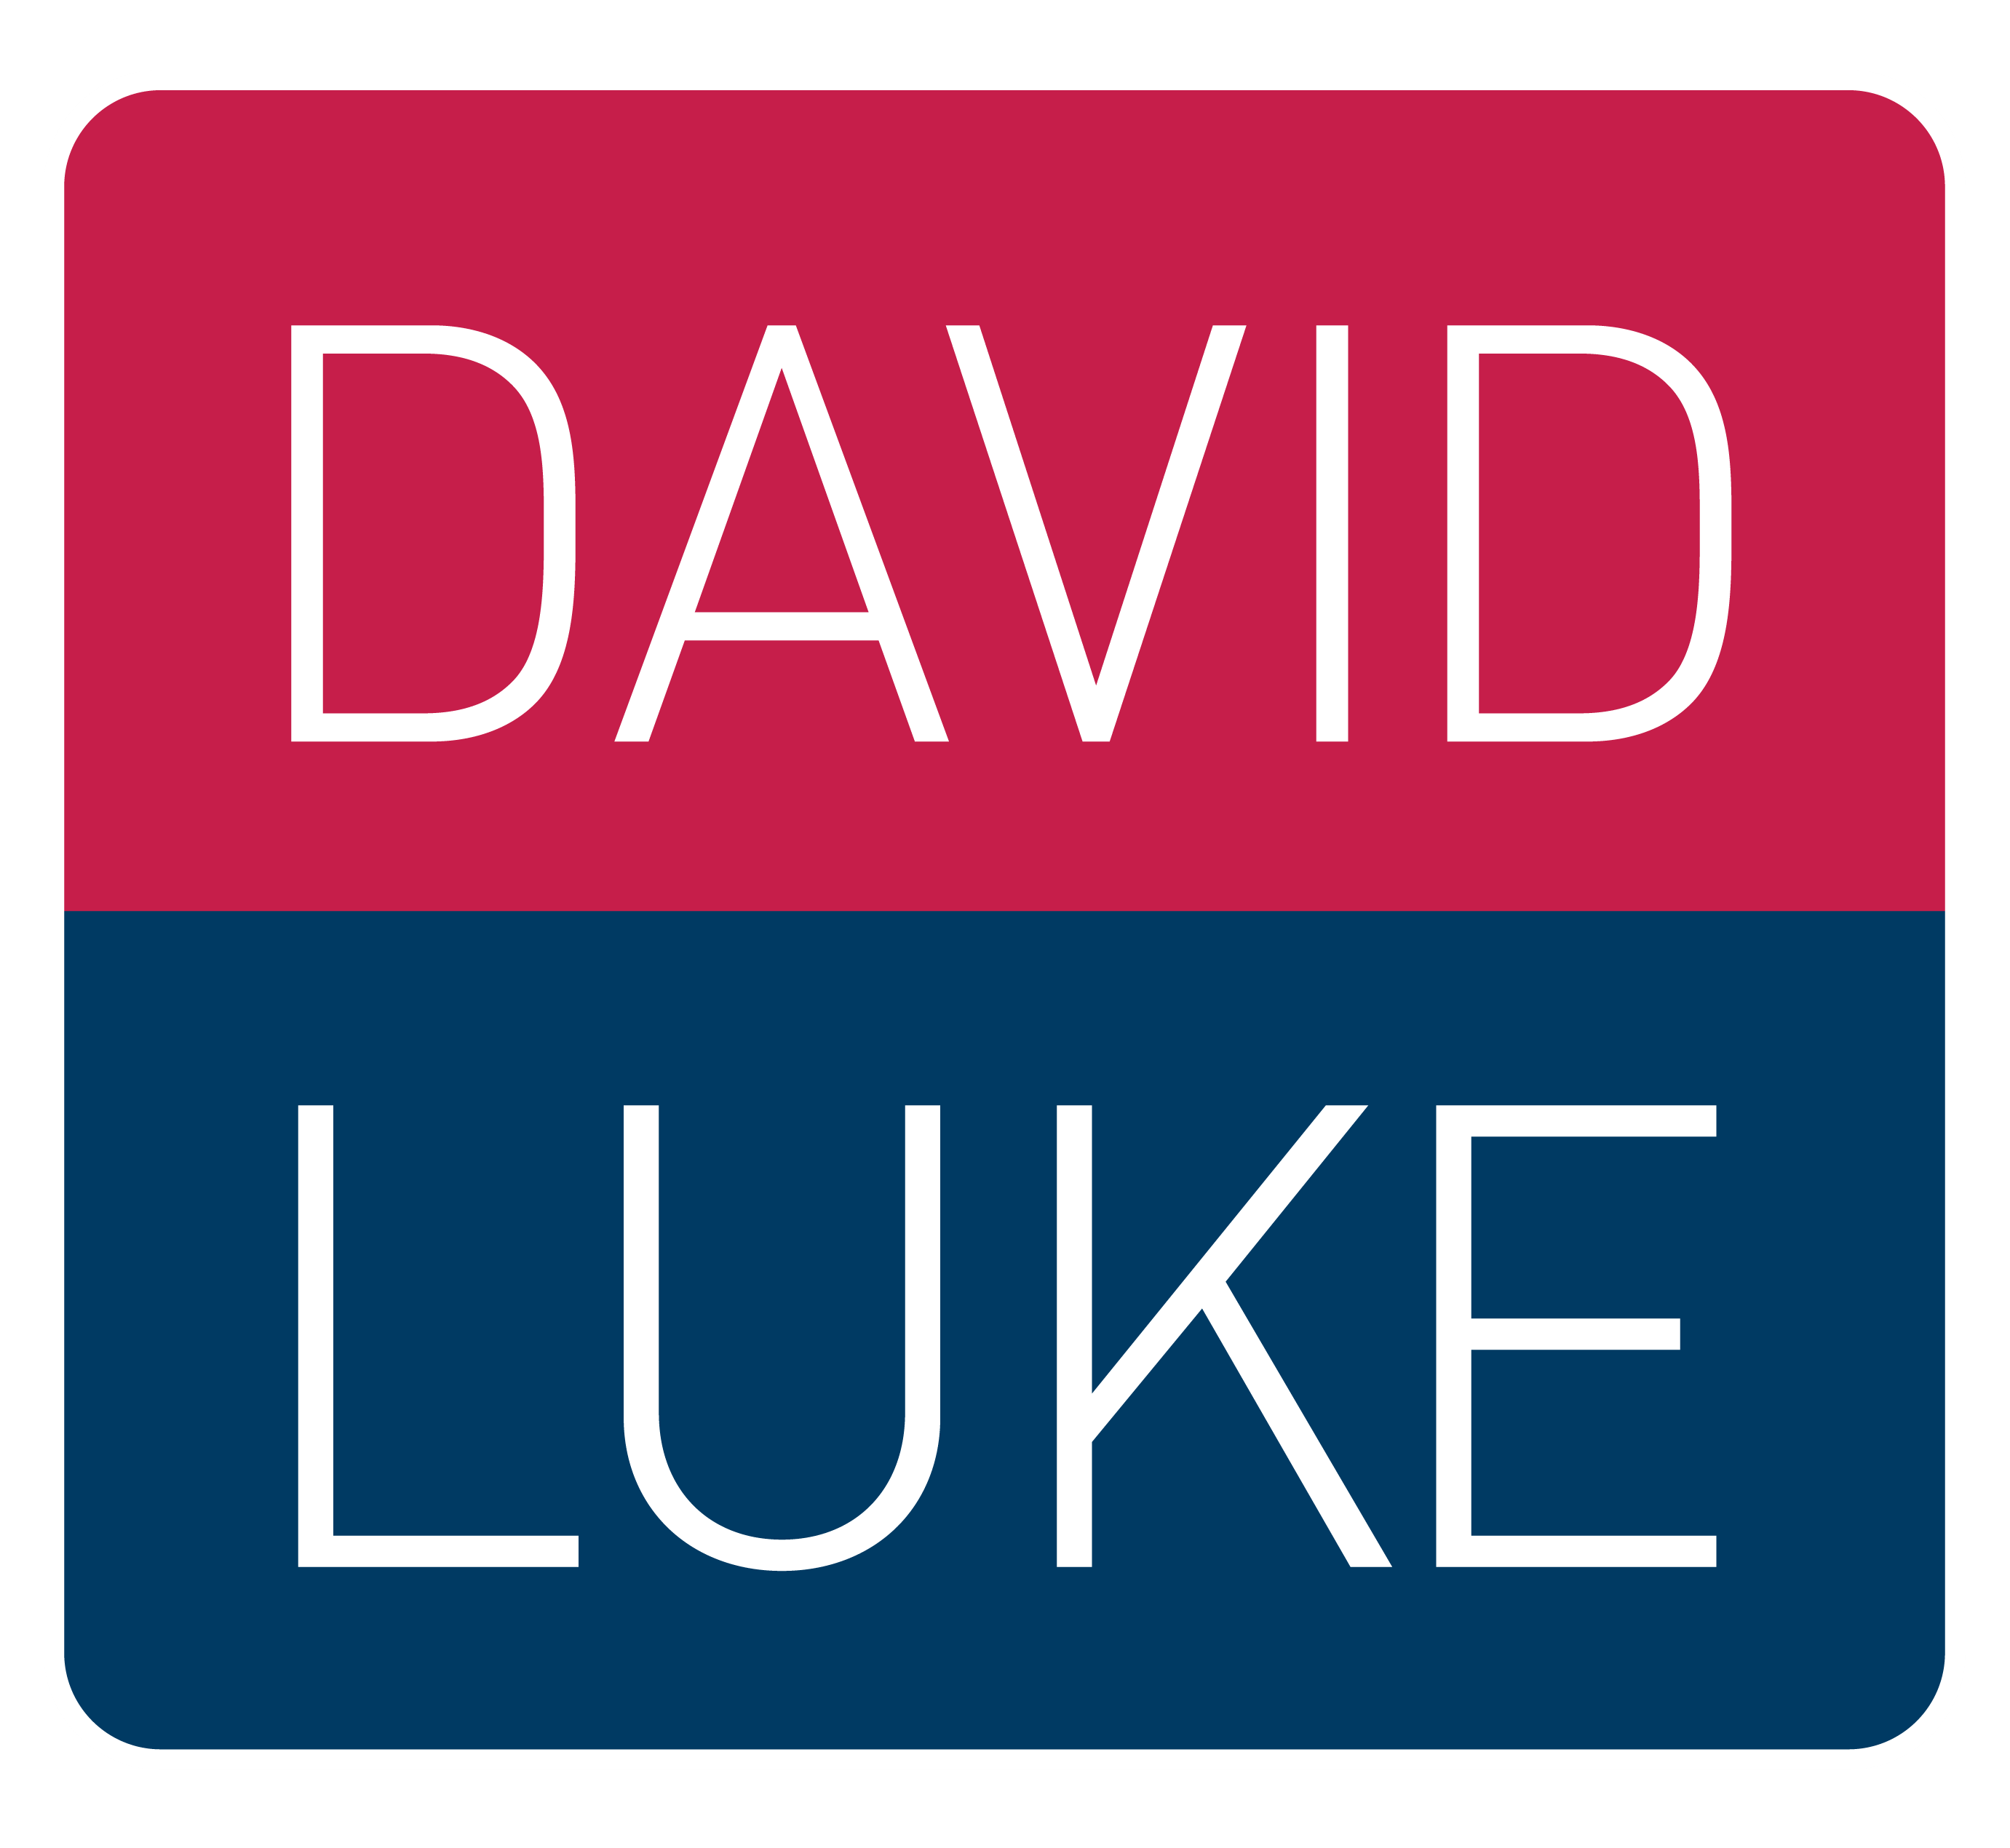 David Luke – David Luke Ltd